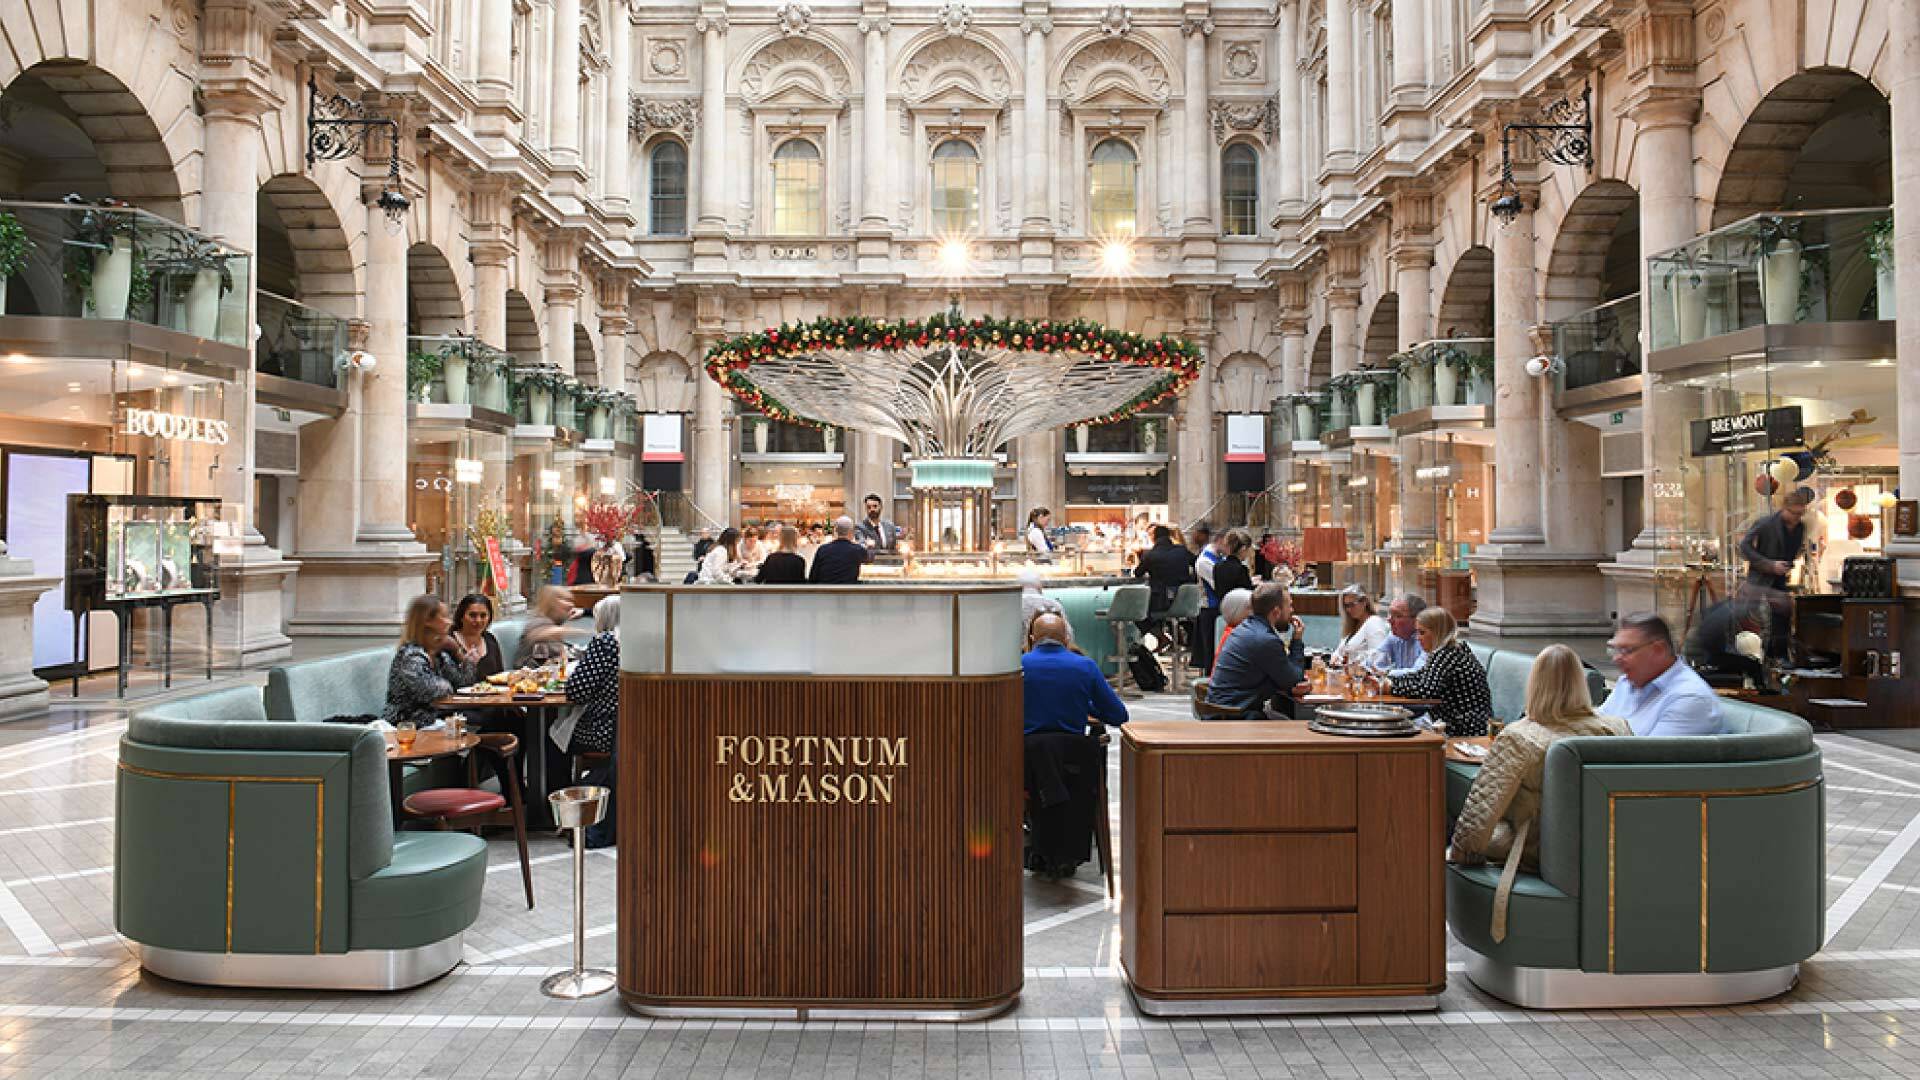 The Fortnum’s Bar & Restaurant at The Royal Exchange